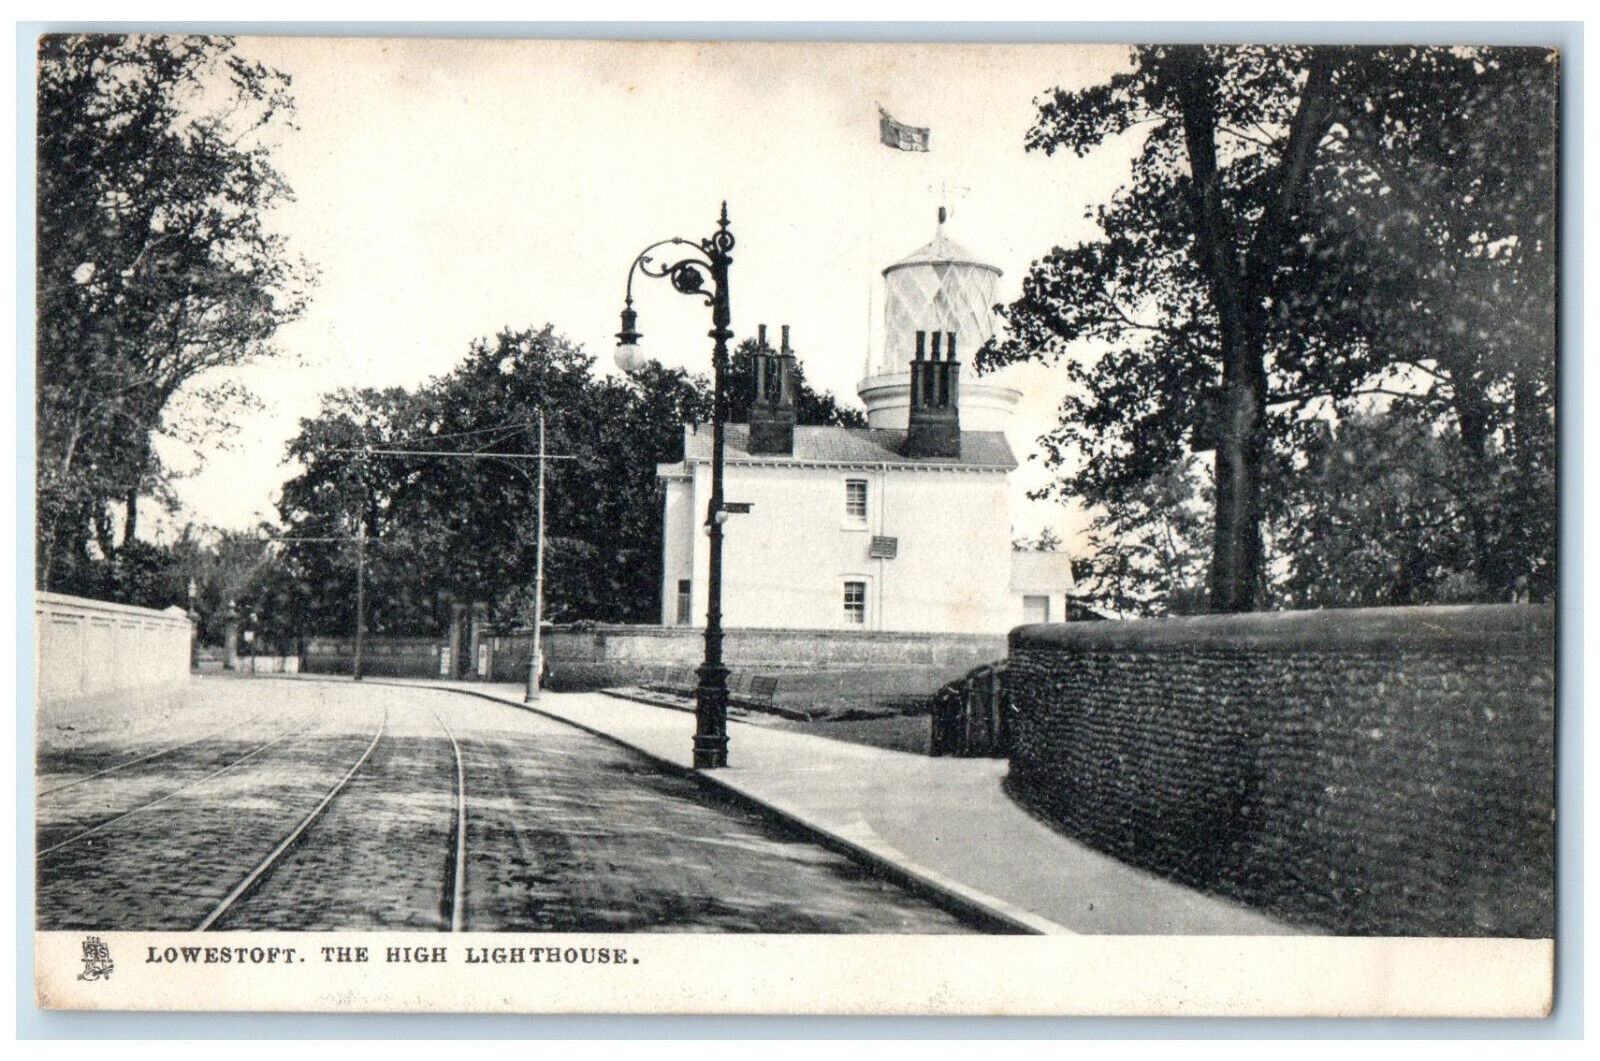 c1910 High Lighthouse Lowestoft Suffolk England Town and City Tuck Art Postcard